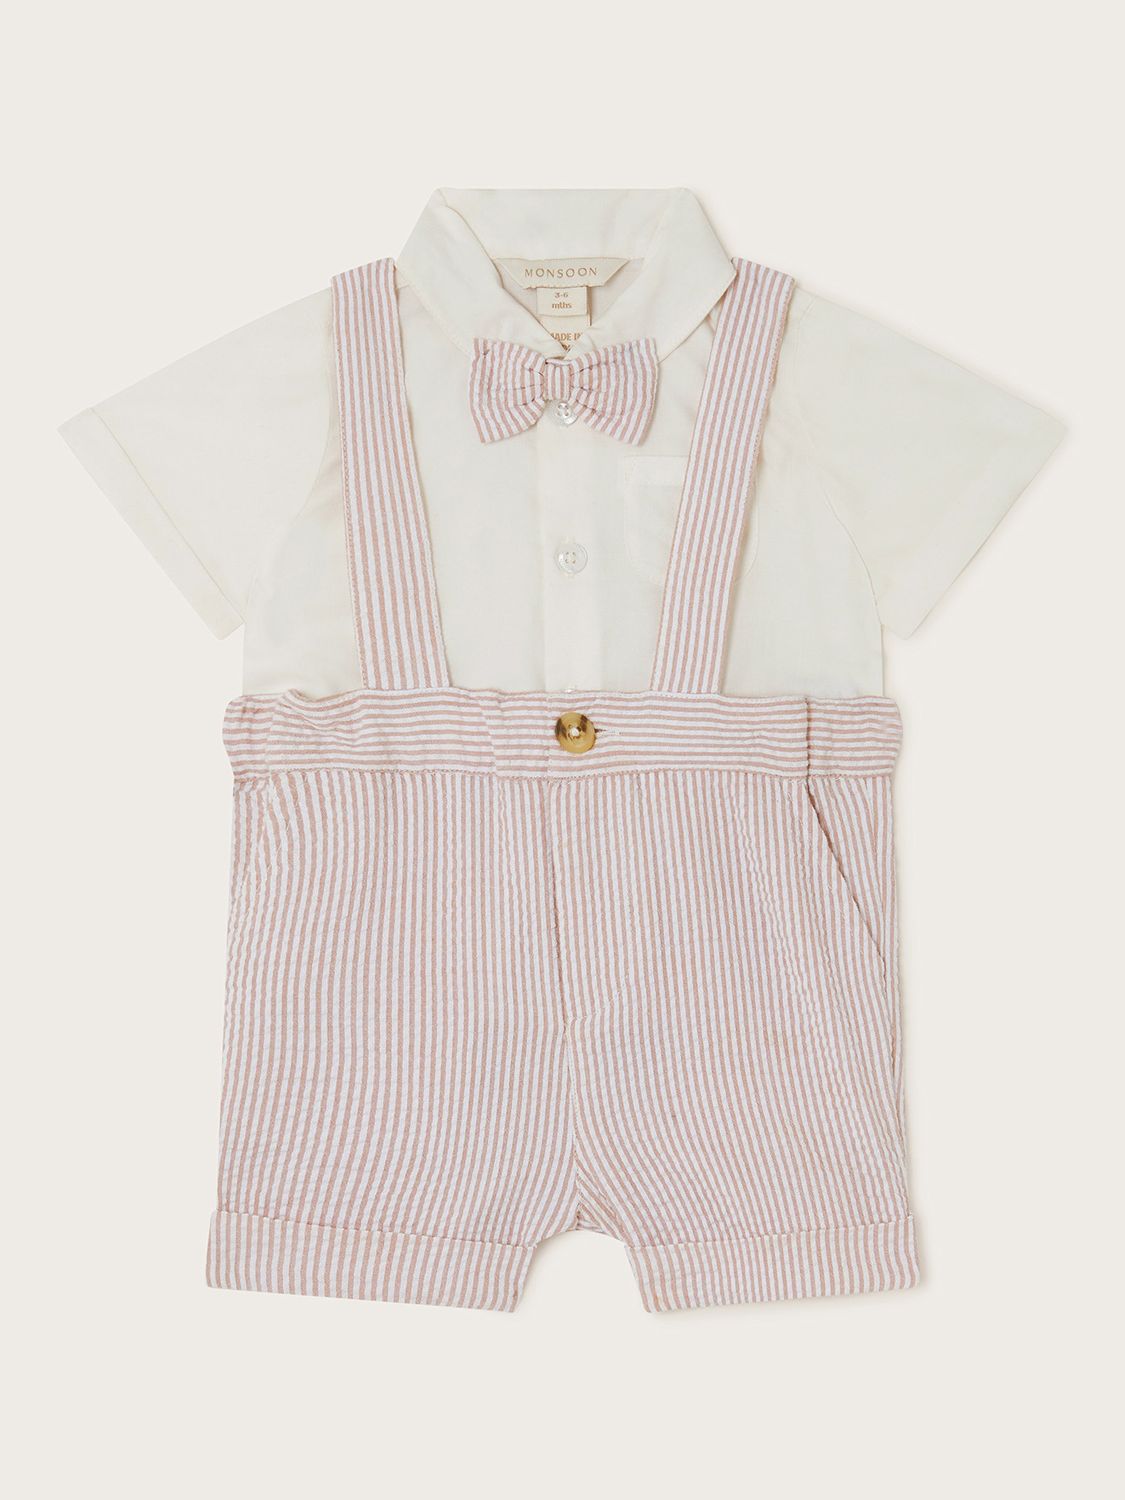 Monsoon Baby Sammy Stripe Brace Shorts, Shirt & Bow Tie Set, Stone, 18-24 months